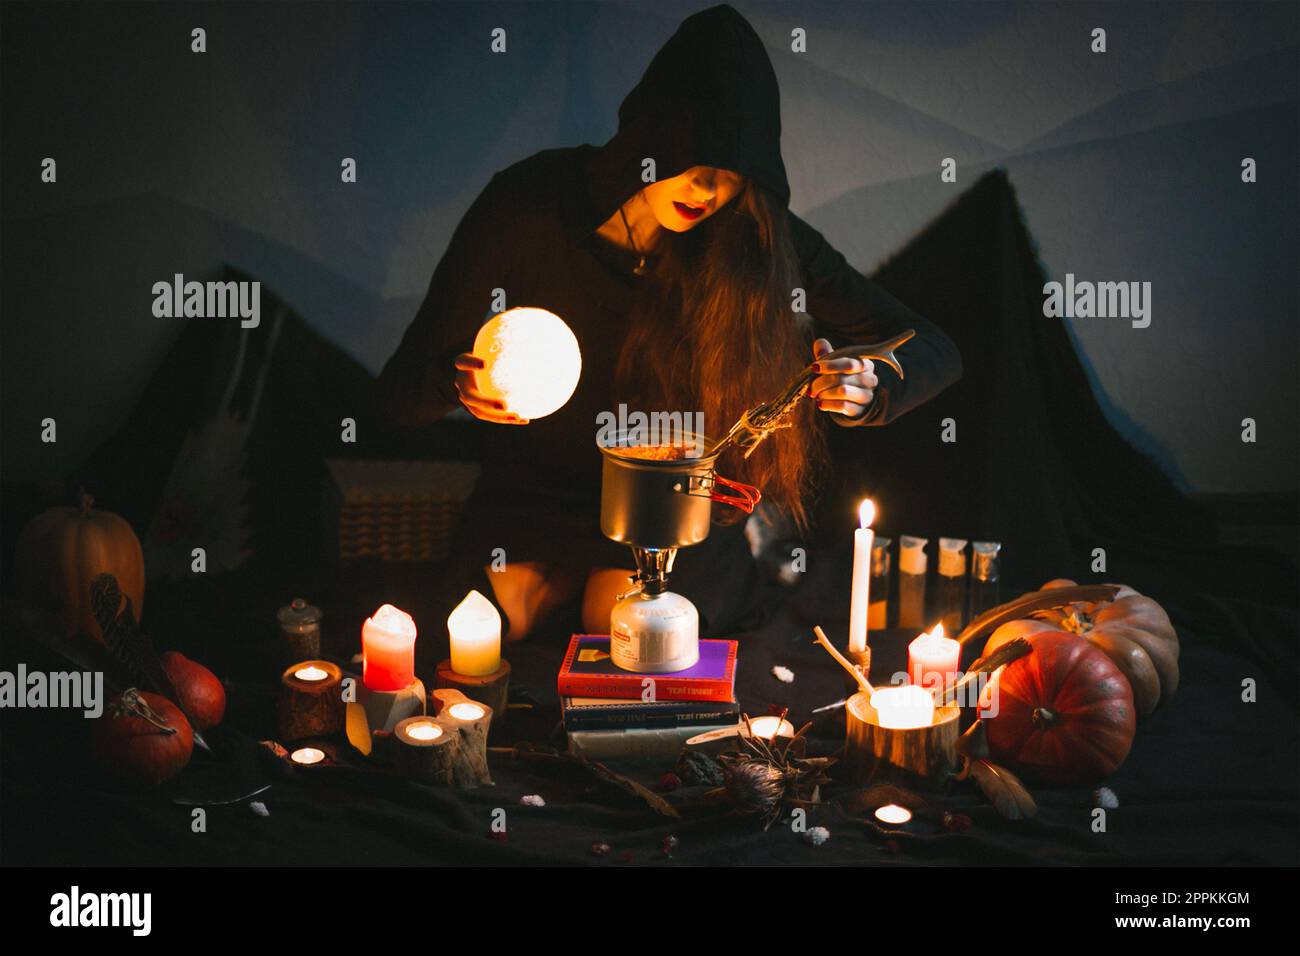 https://c8.alamy.com/comp/2PPKKGM/close-up-surrounded-by-candles-sorceress-preparing-food-portrait-picture-2PPKKGM.jpg